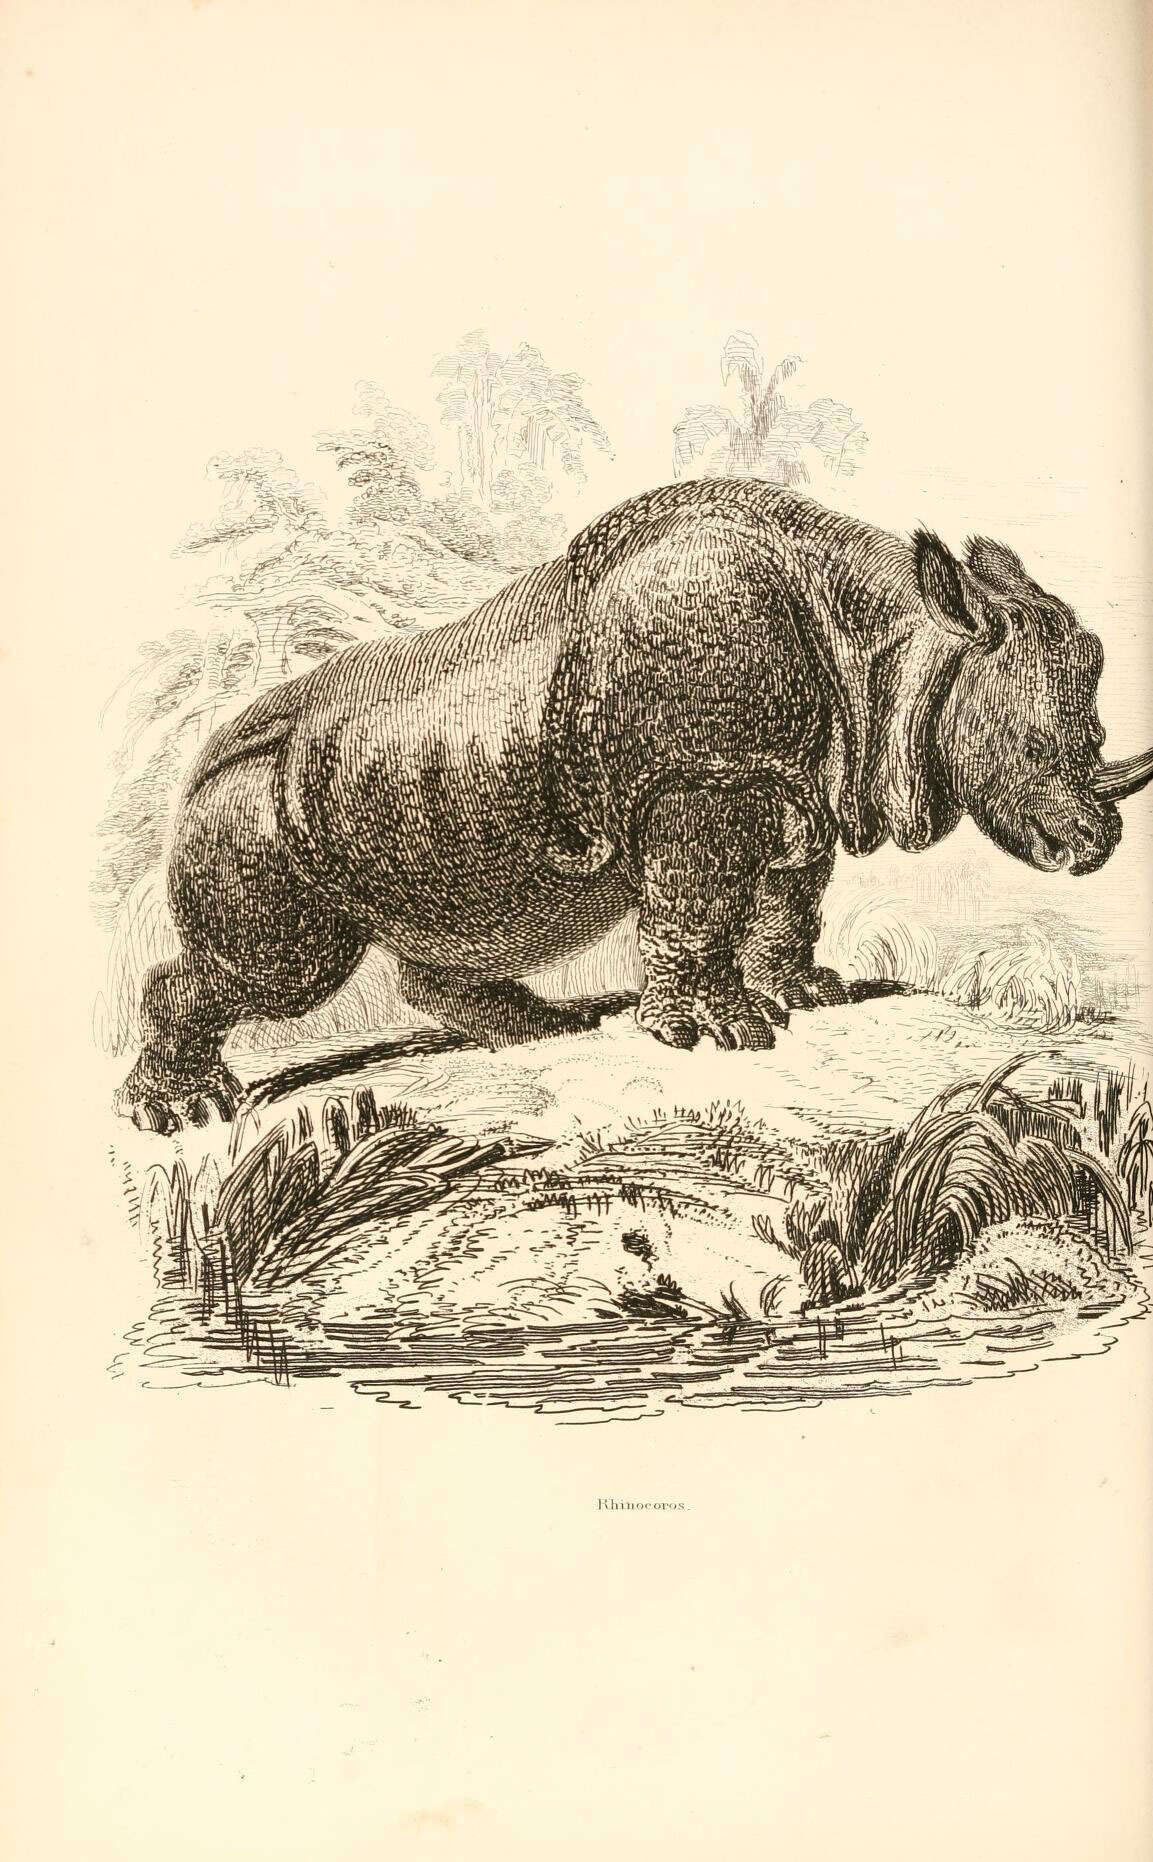 Image of rhinos